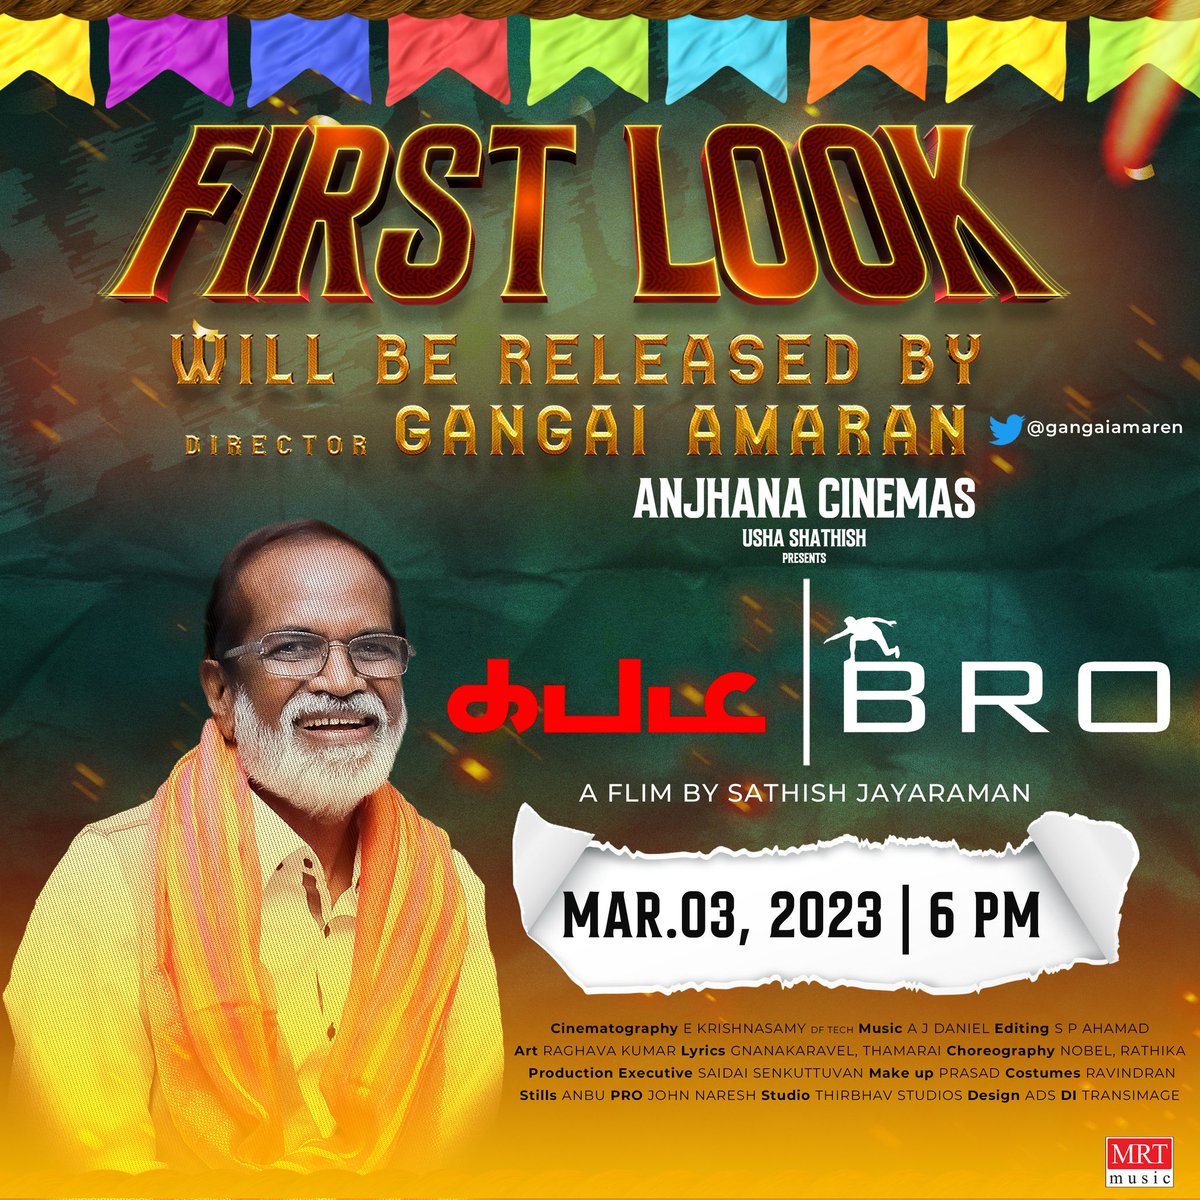 1st Look Poster of @anjhana_cinemas  #KabadiBro directed by @jeyteeyes will be released by @gangaiamaren

 Tomorrow 6pm. Stay tuned! 

Starring Sujann, @impriyaalal , Singampuli, @manobalam, Sanjay, @Rajiniworld

@ajdanny @krishnasamy_e @gnanakaravel @mrtmusicoff @pro_johnnaresh